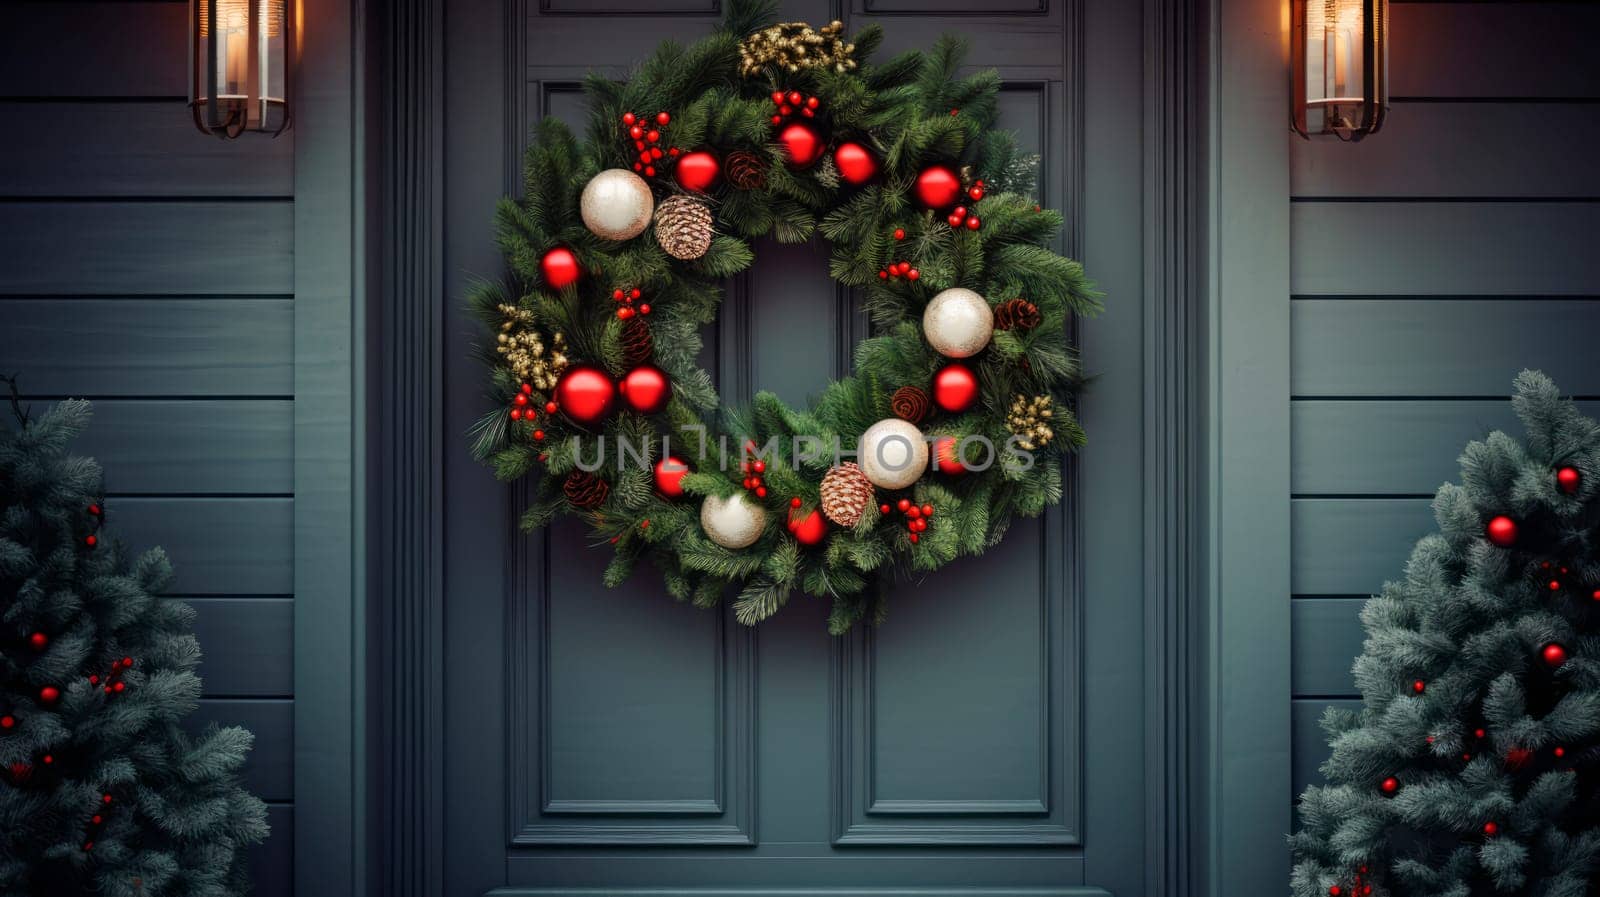 Beautiful Christmas wreath hanging on wooden door. High quality photo